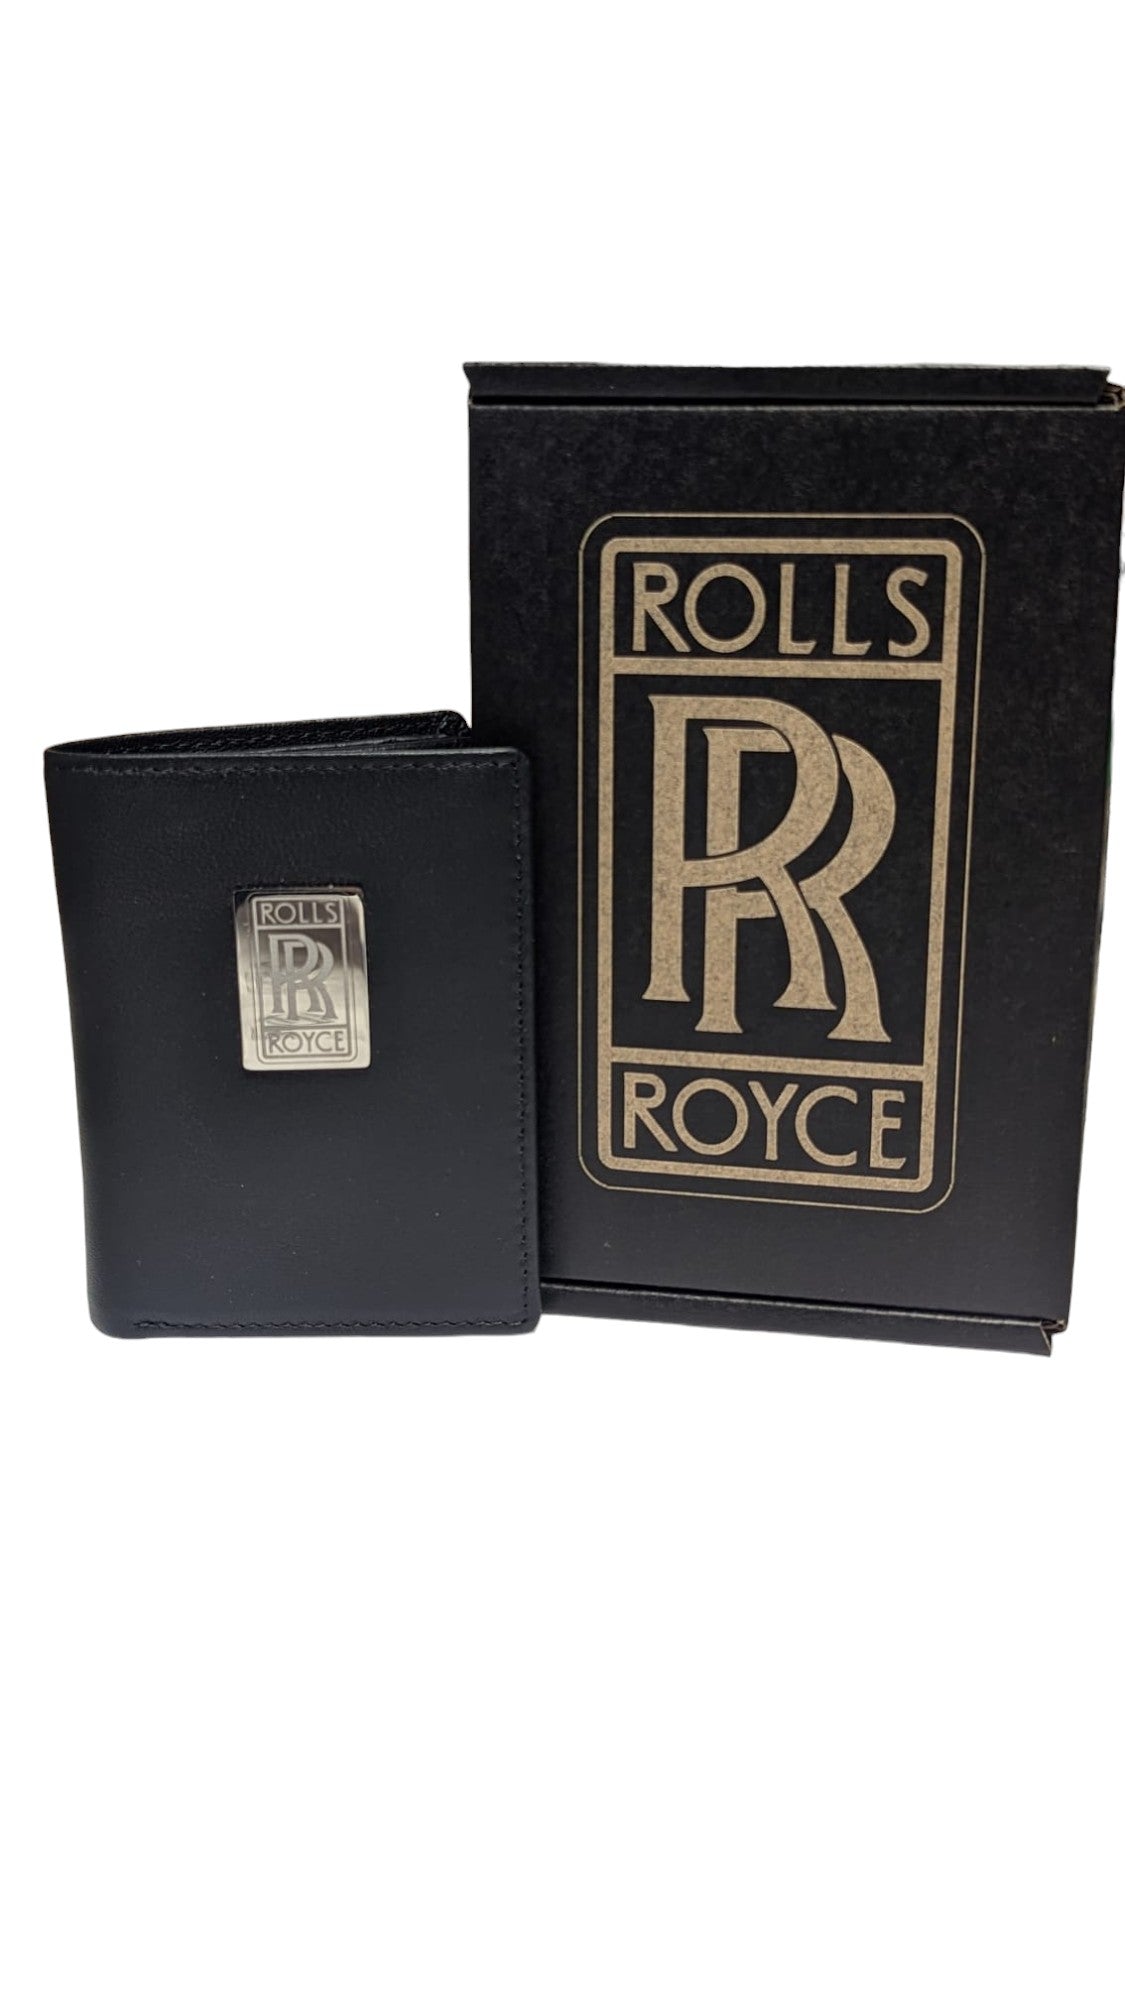 Premium Nappa Genuine Leather, Rolls Royce Bi Fold Wallet Swolit RFID Blocker Gift Boxed